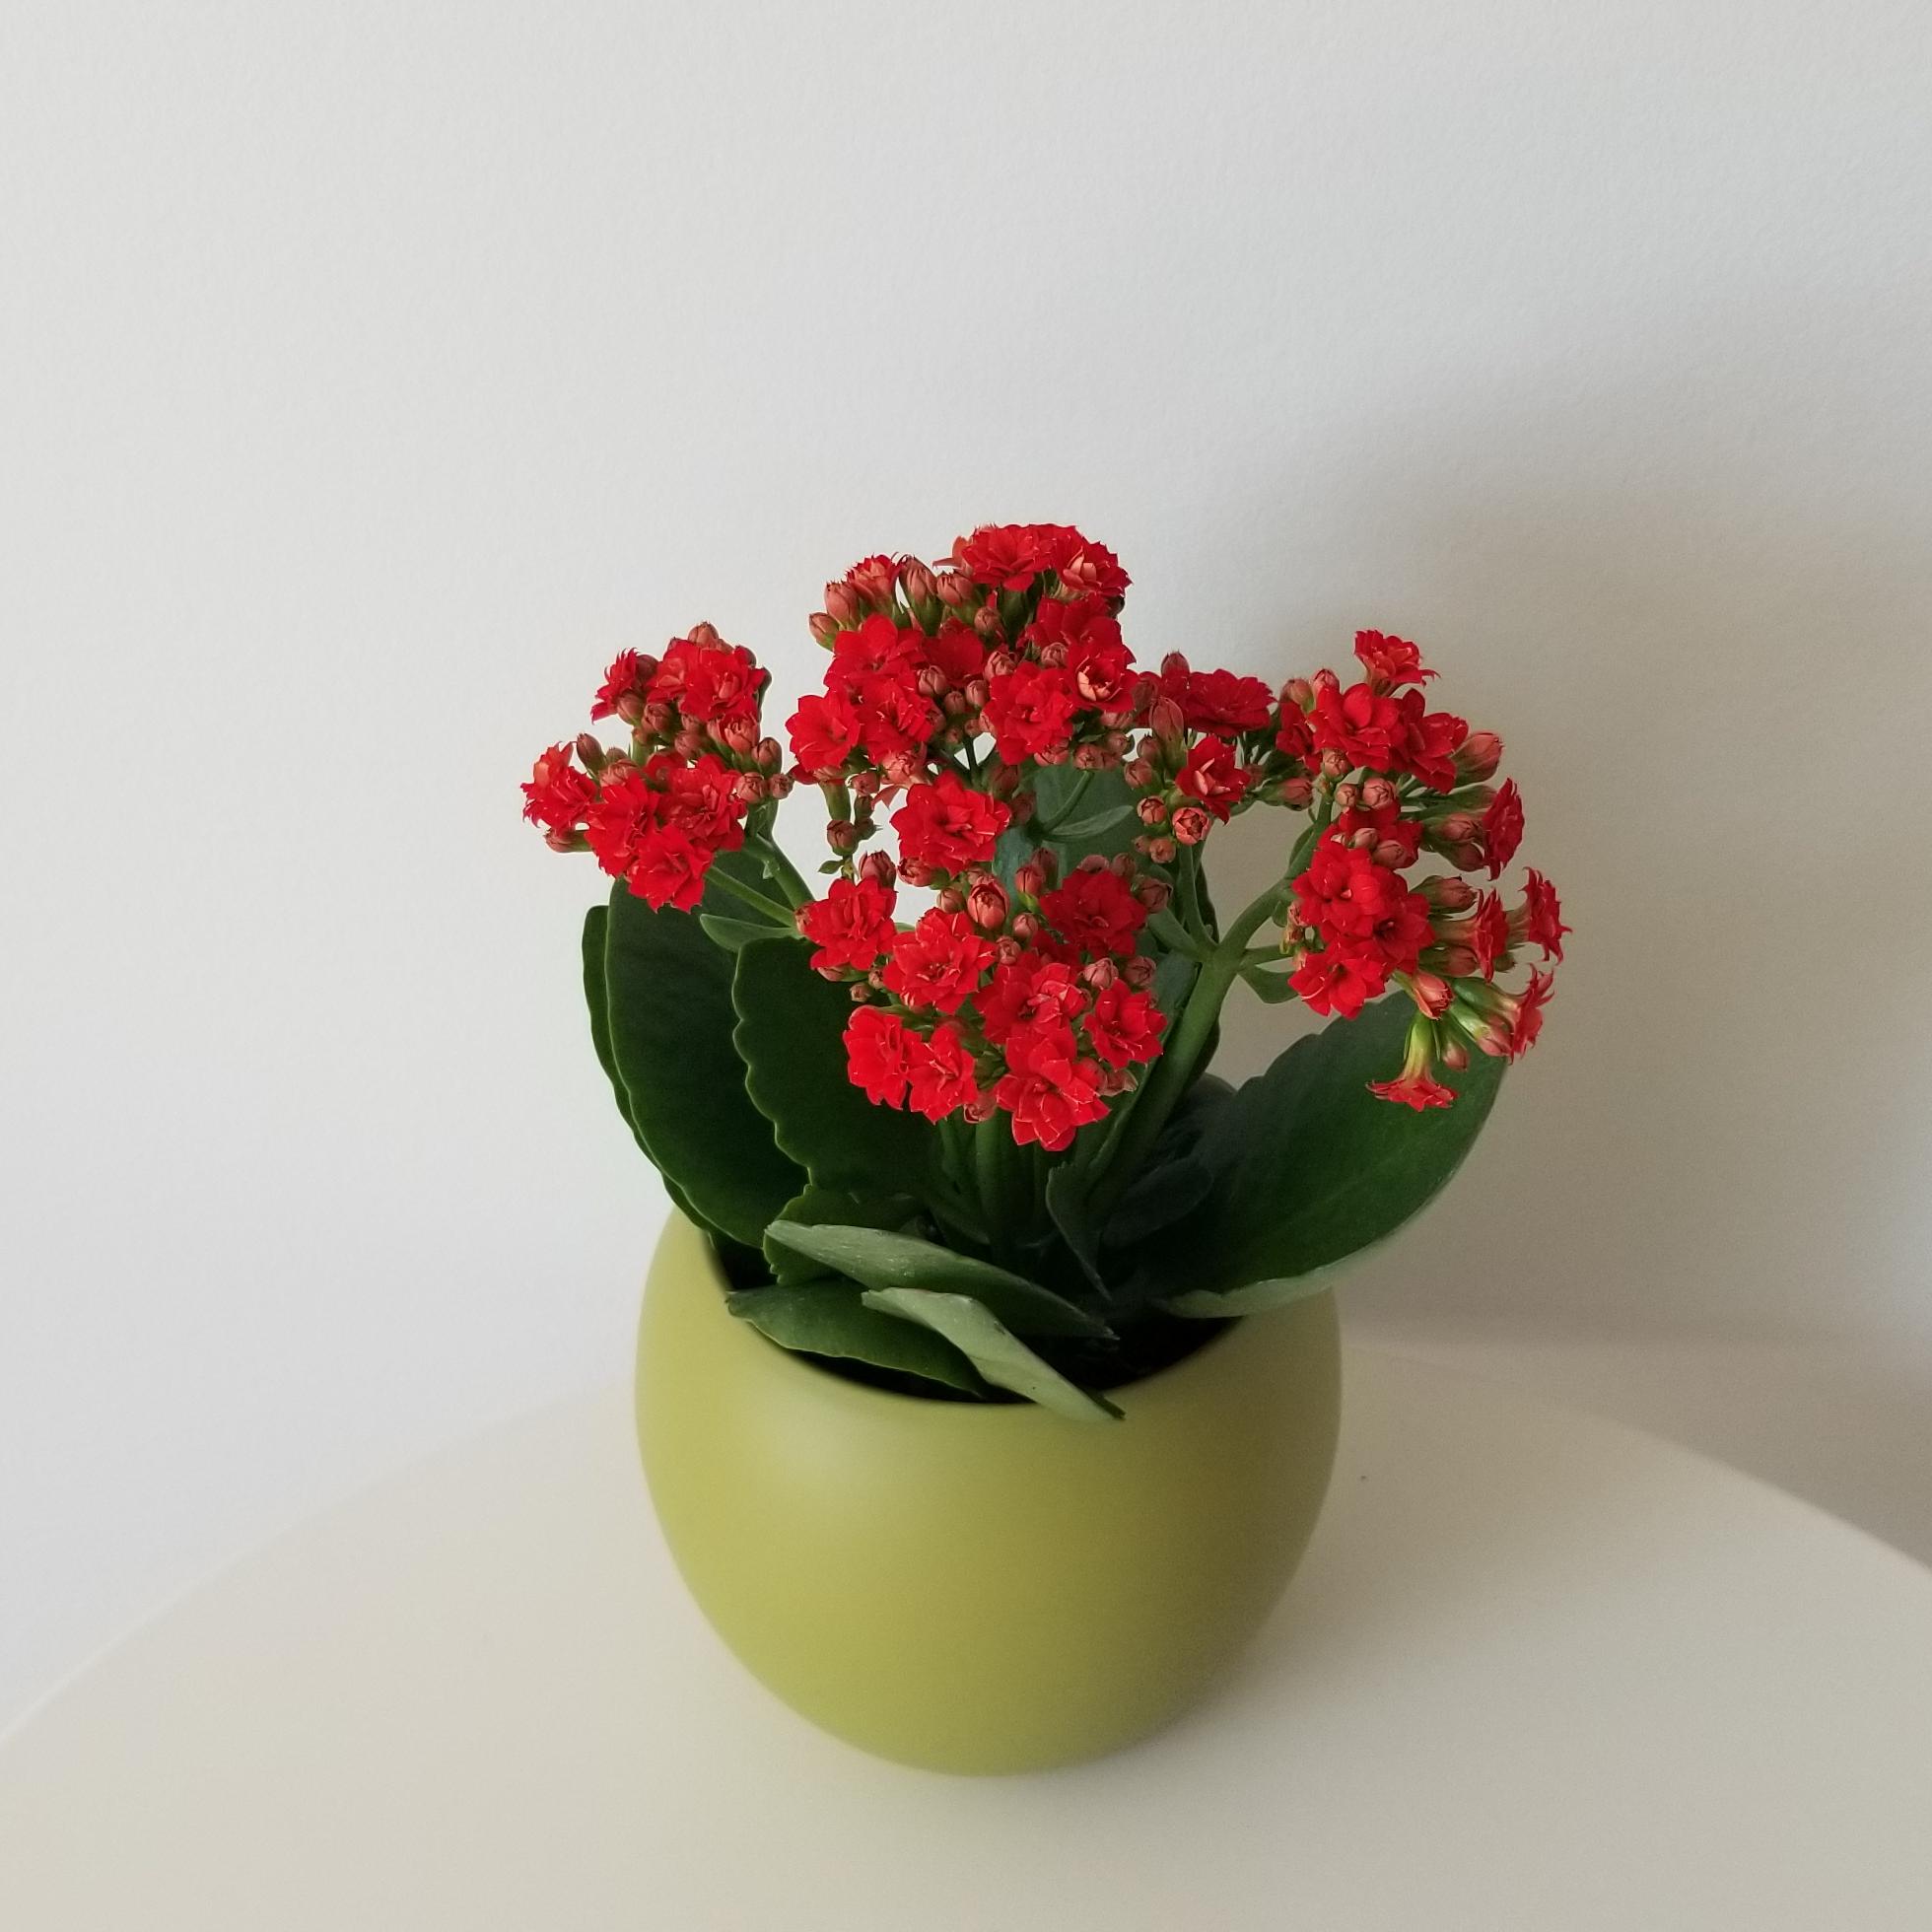 kalanchoe red flowers in decorative ceramic pot flowering plants gifts Mother's Day houseplants Toronto Mississauga Etobicoke Oakville Brampton other GTA